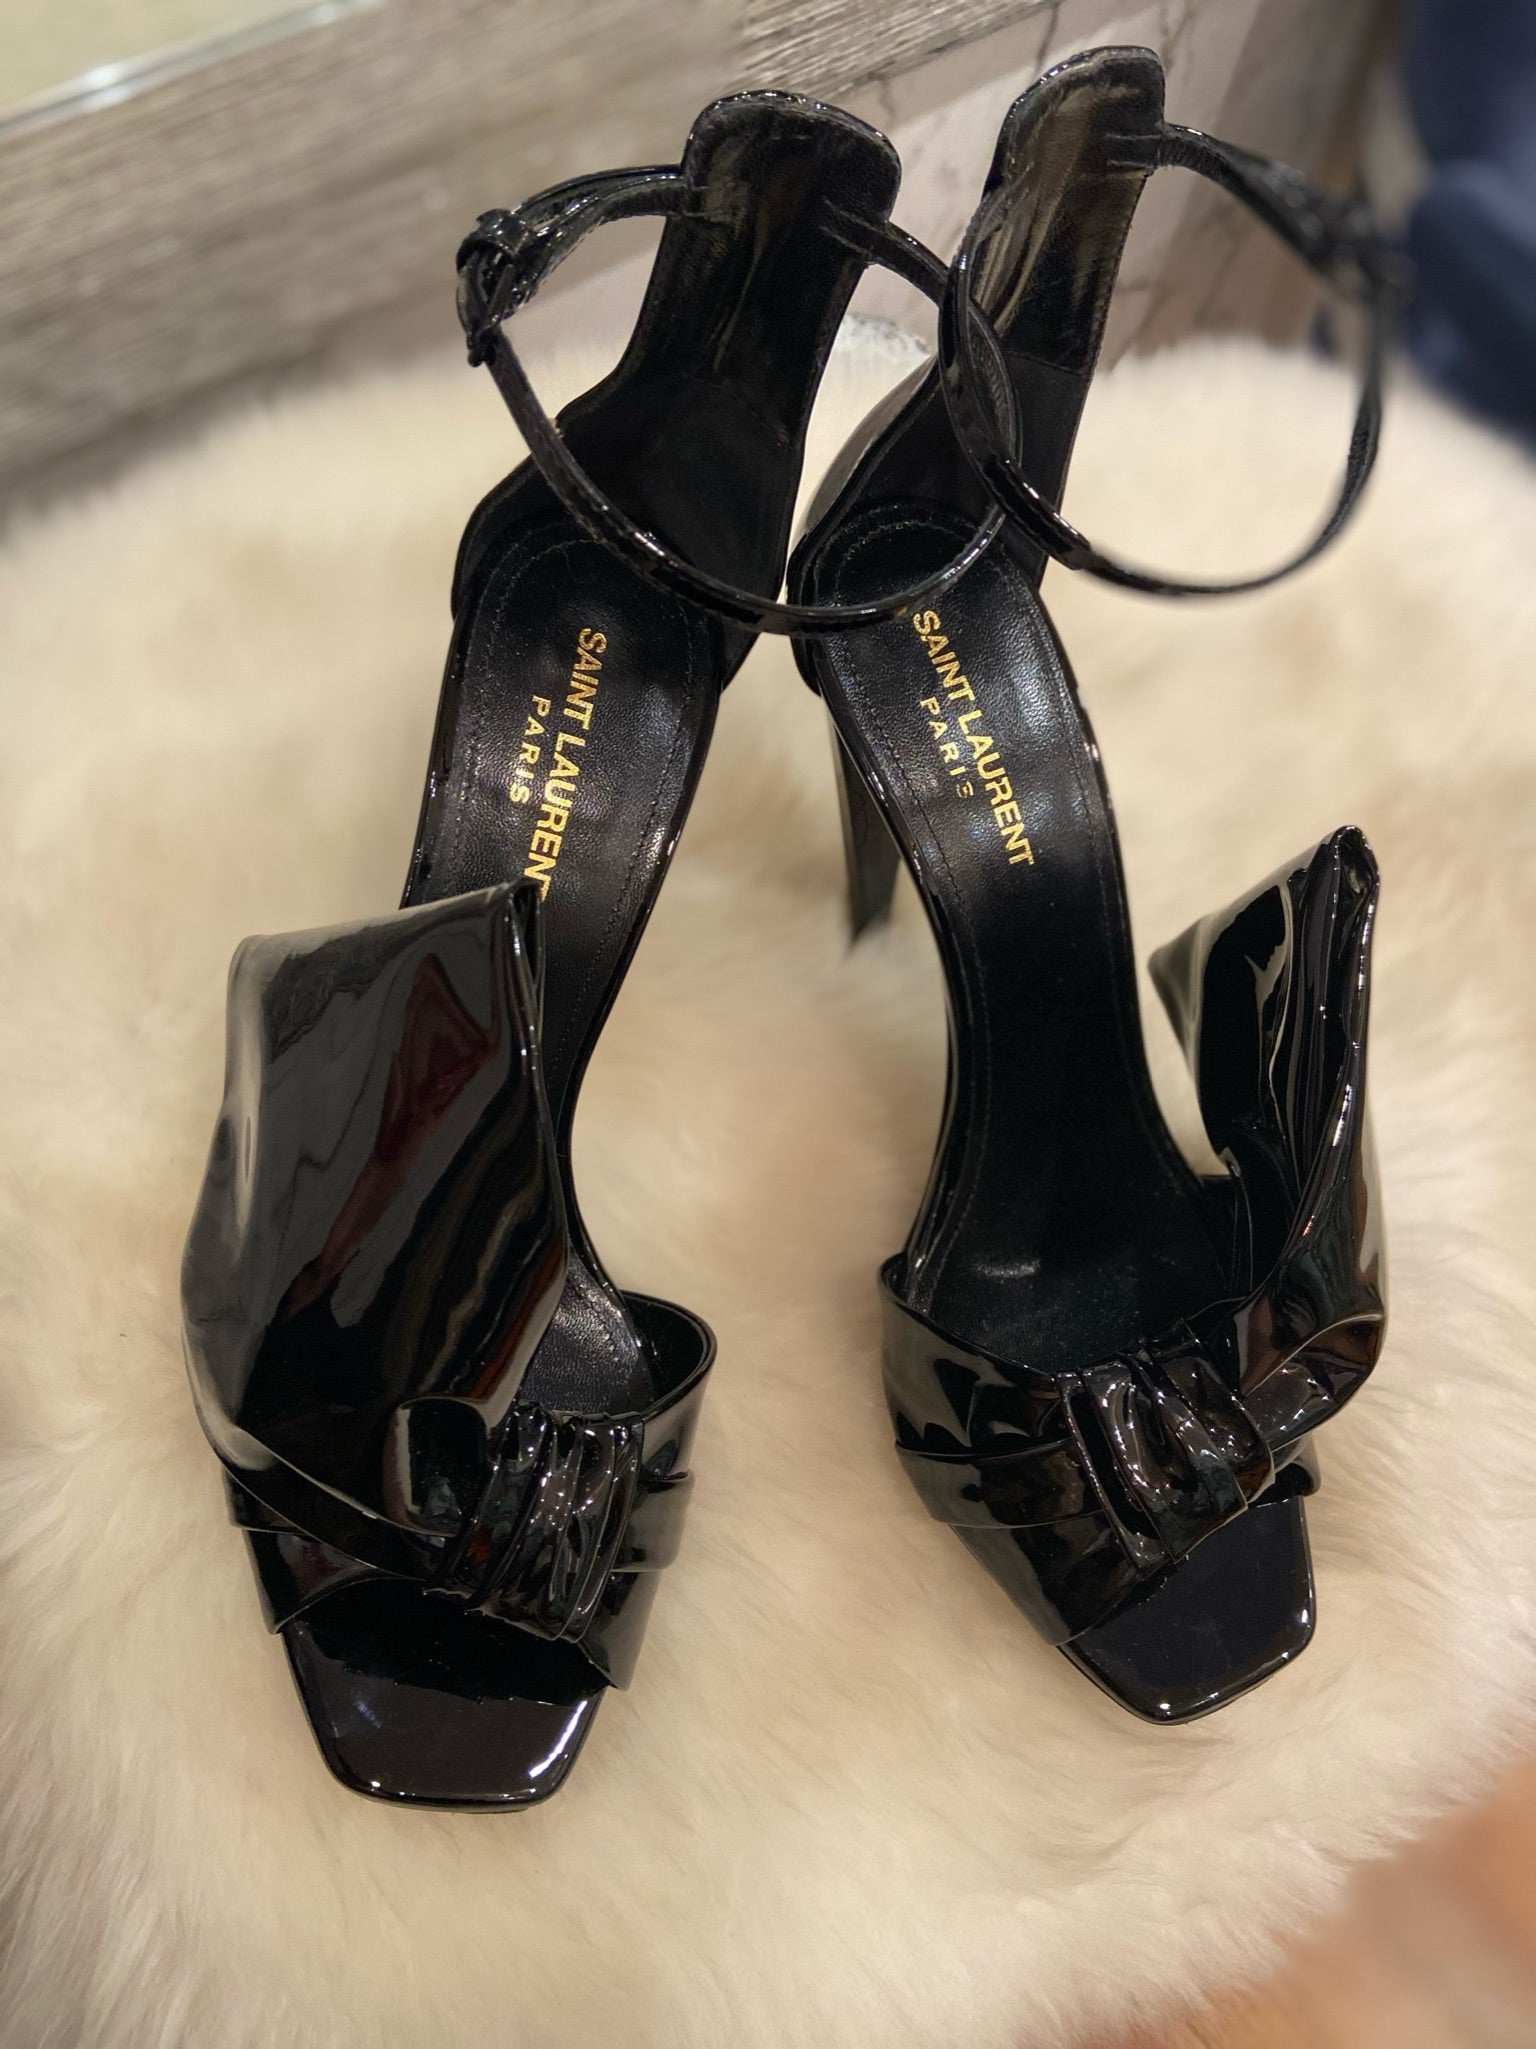 saint laurent heels 39 Vernice Chiffon Nero. Have only been worn once.